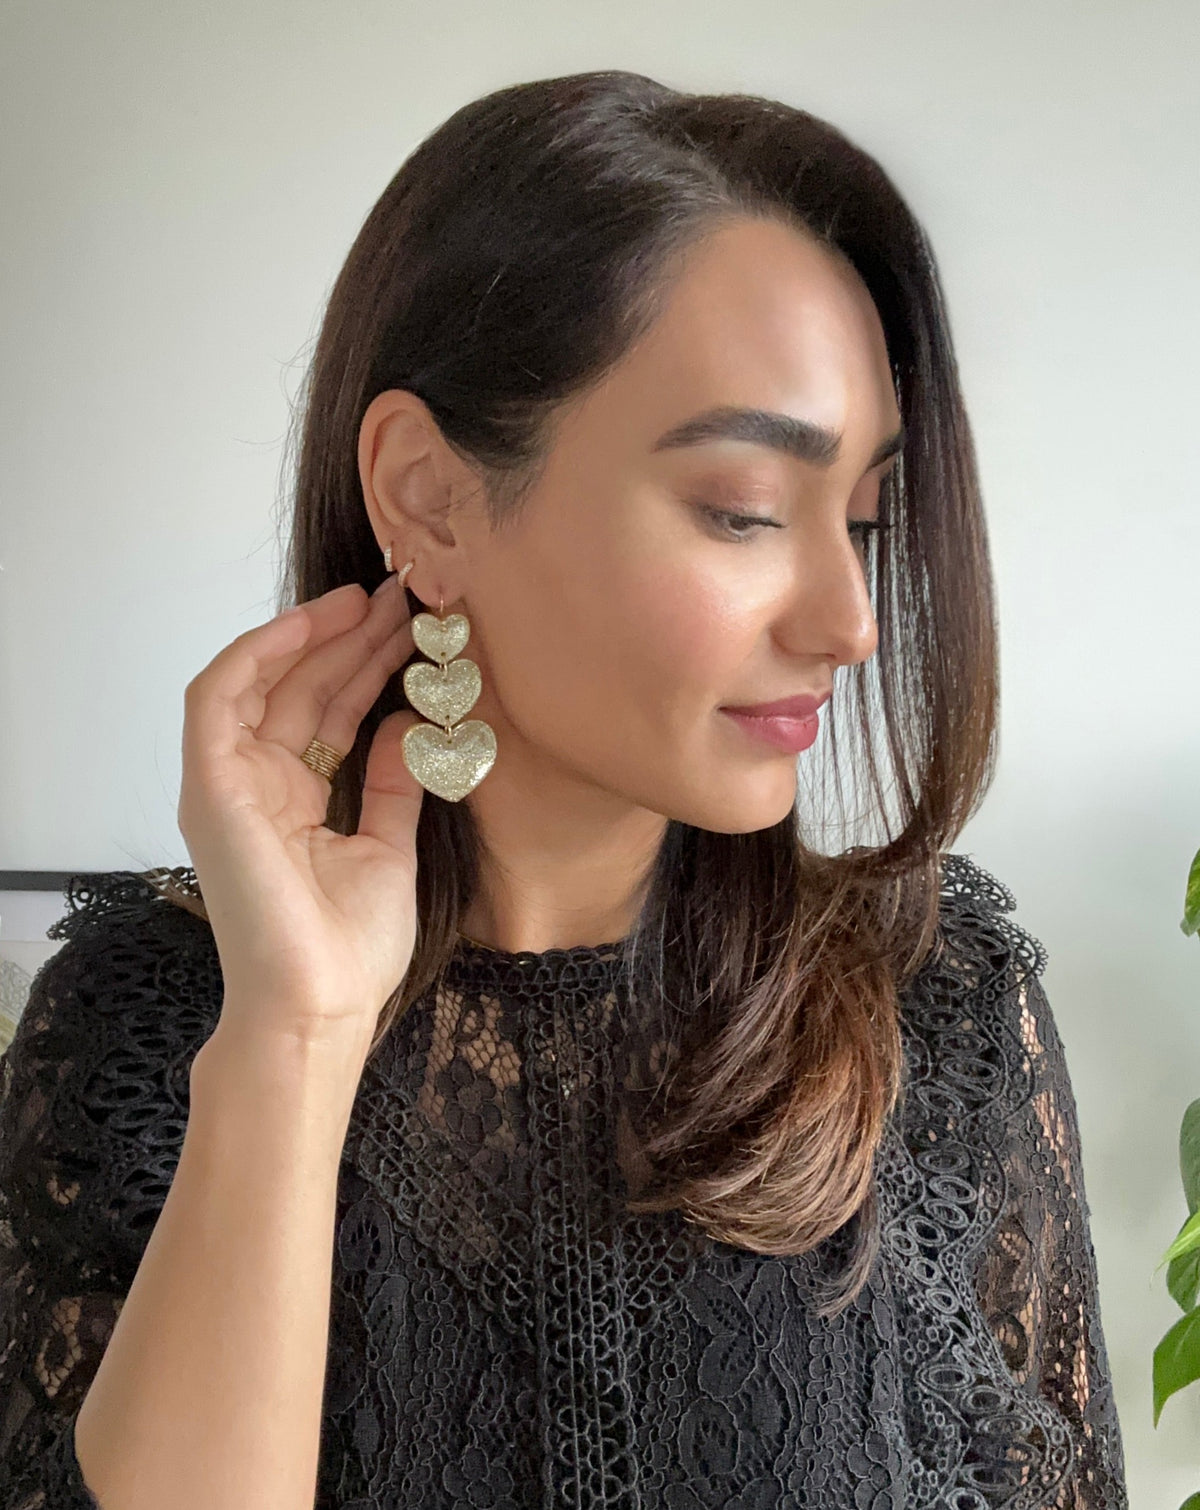 Leyli earrings in color gold, on model.